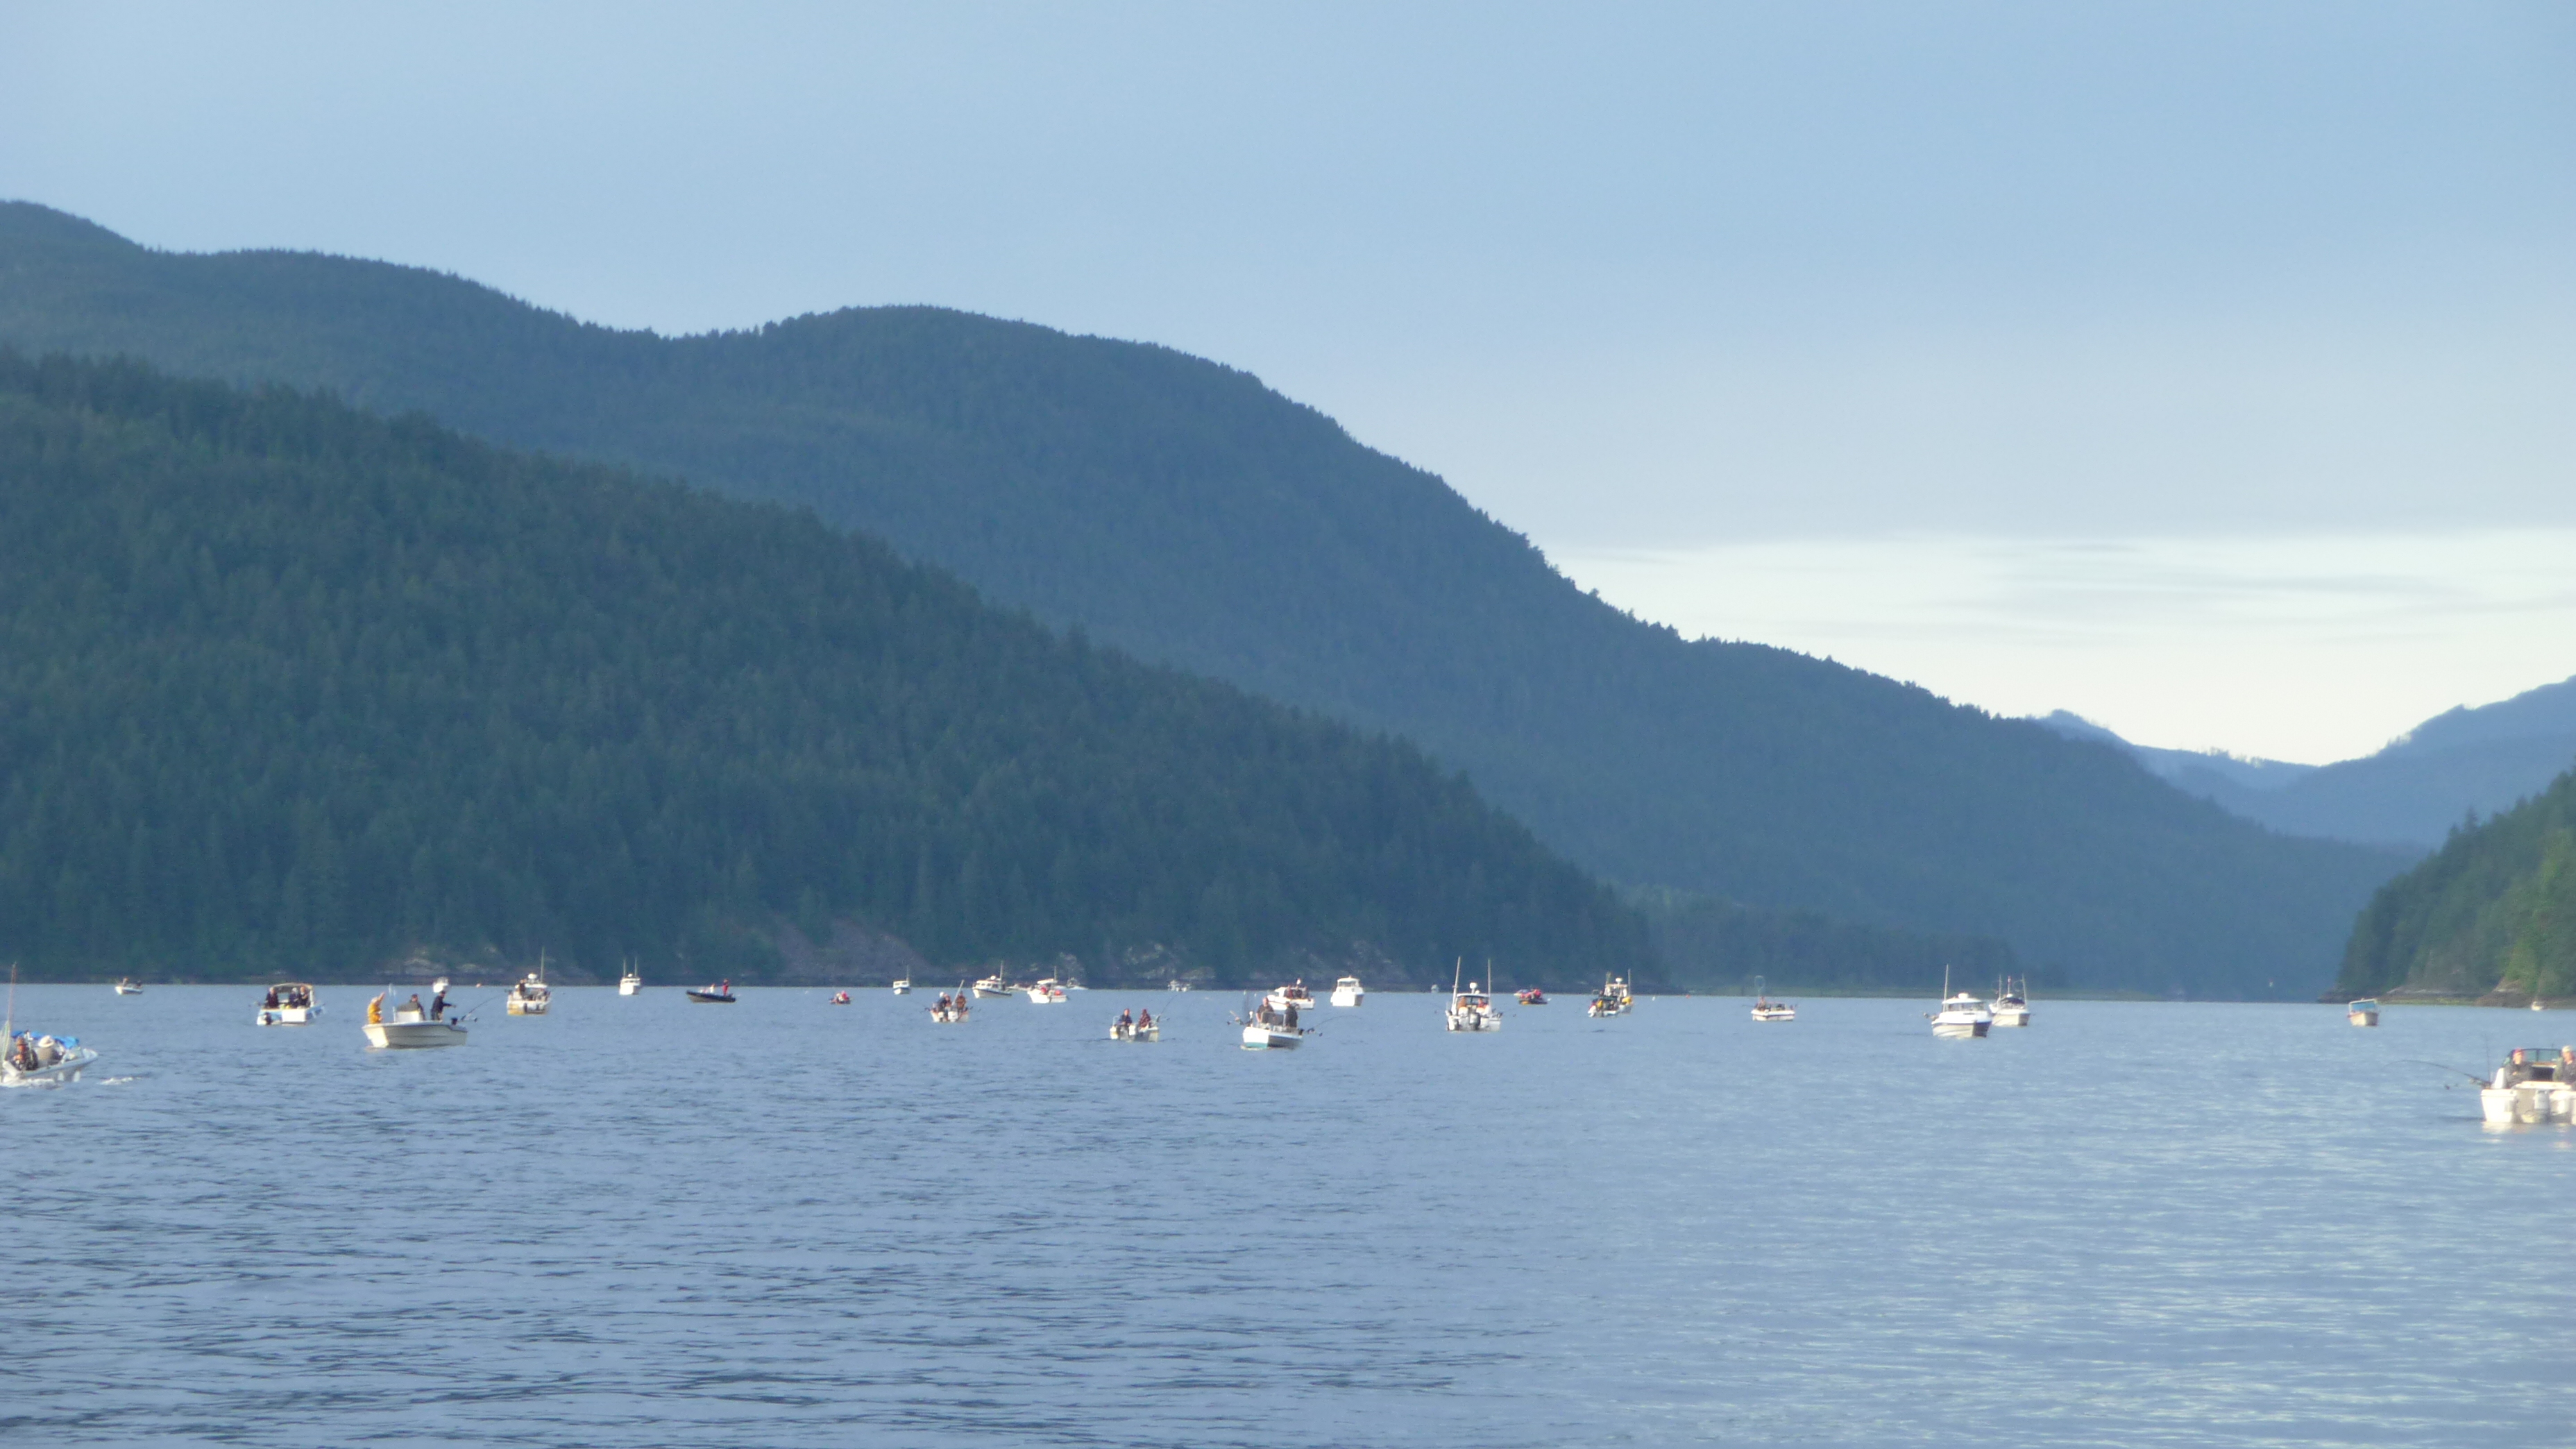 Sockey boats in Alberni Inlet